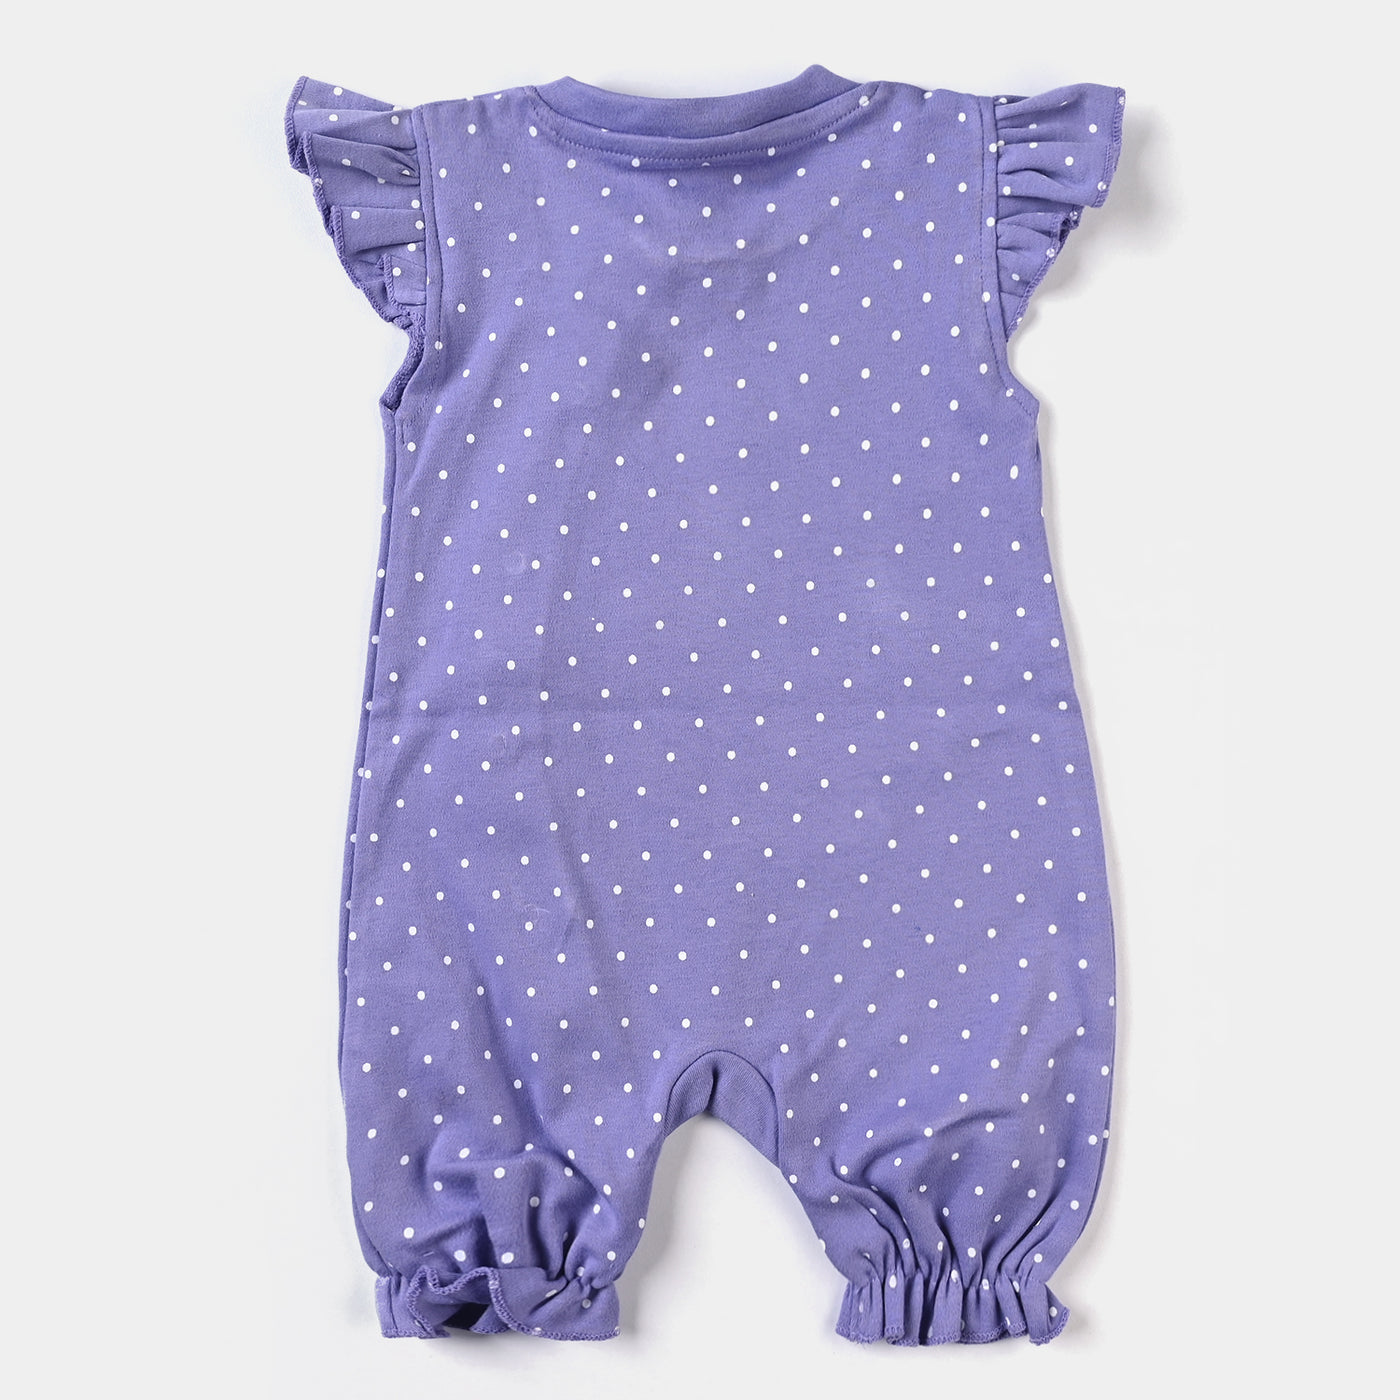 Infant Girls Cotton Interlock Knitted Romper Mummy & me-Purple